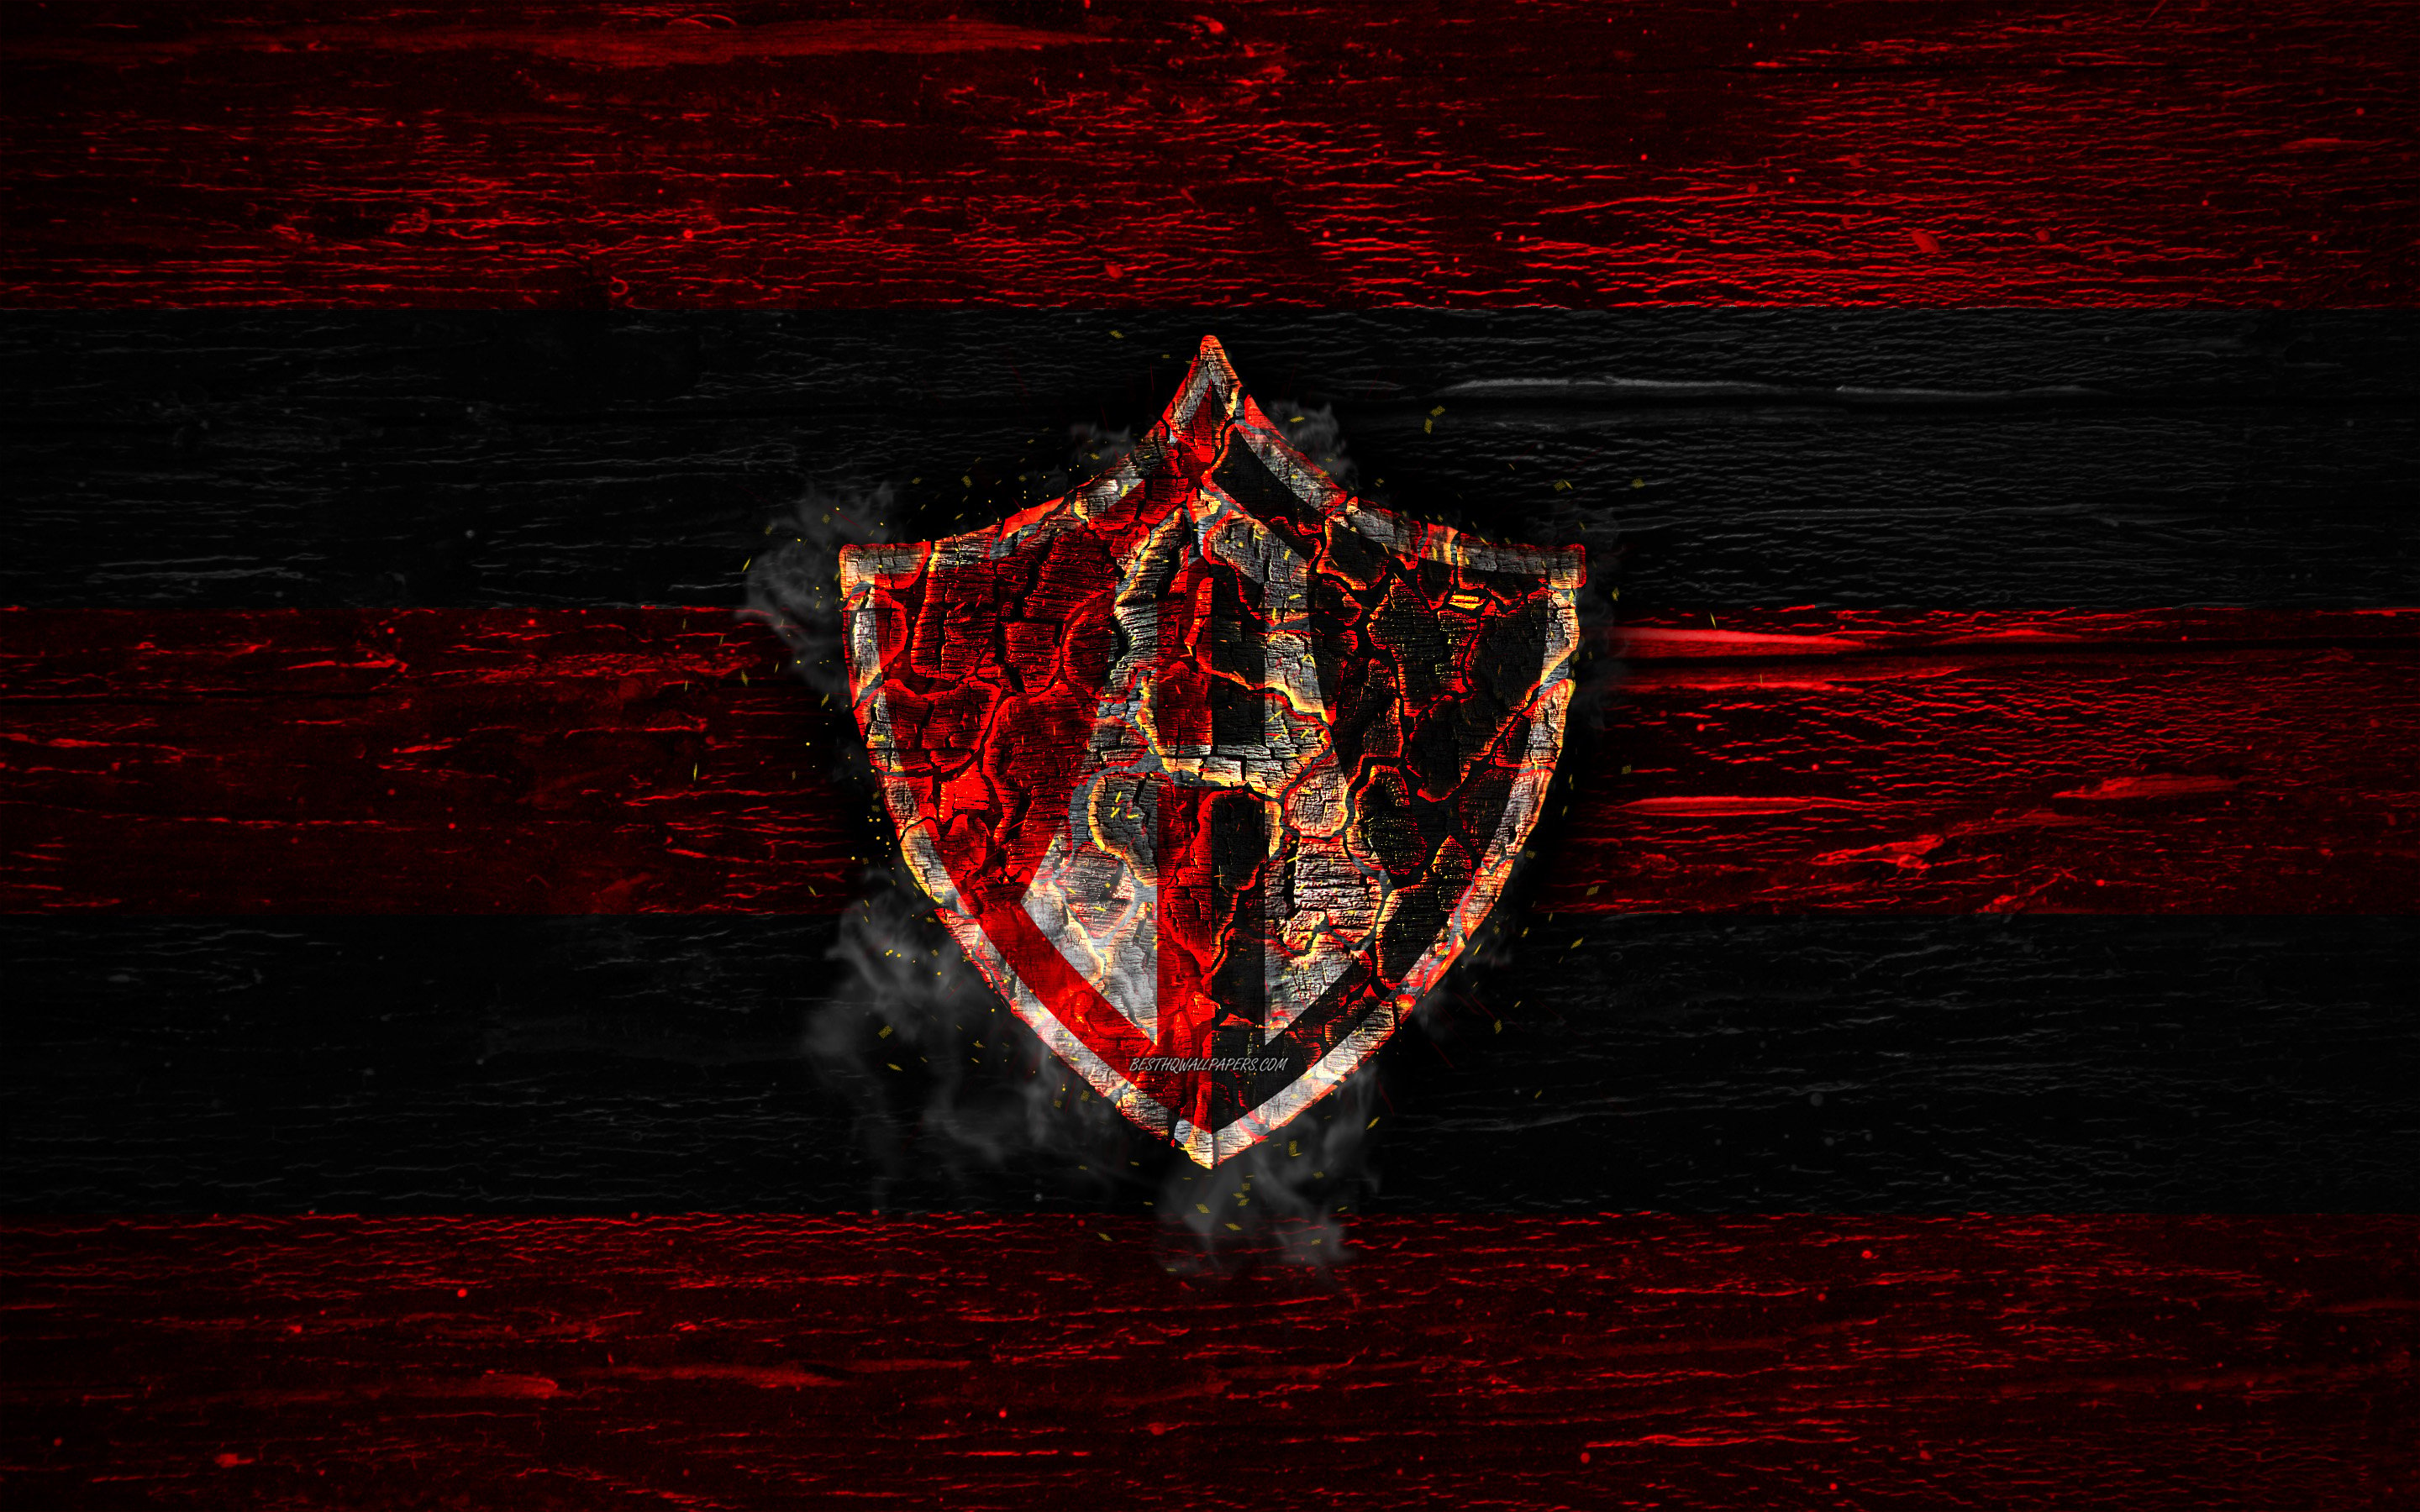 Download wallpaper Atlas FC, fire logo, Liga MX, red and black